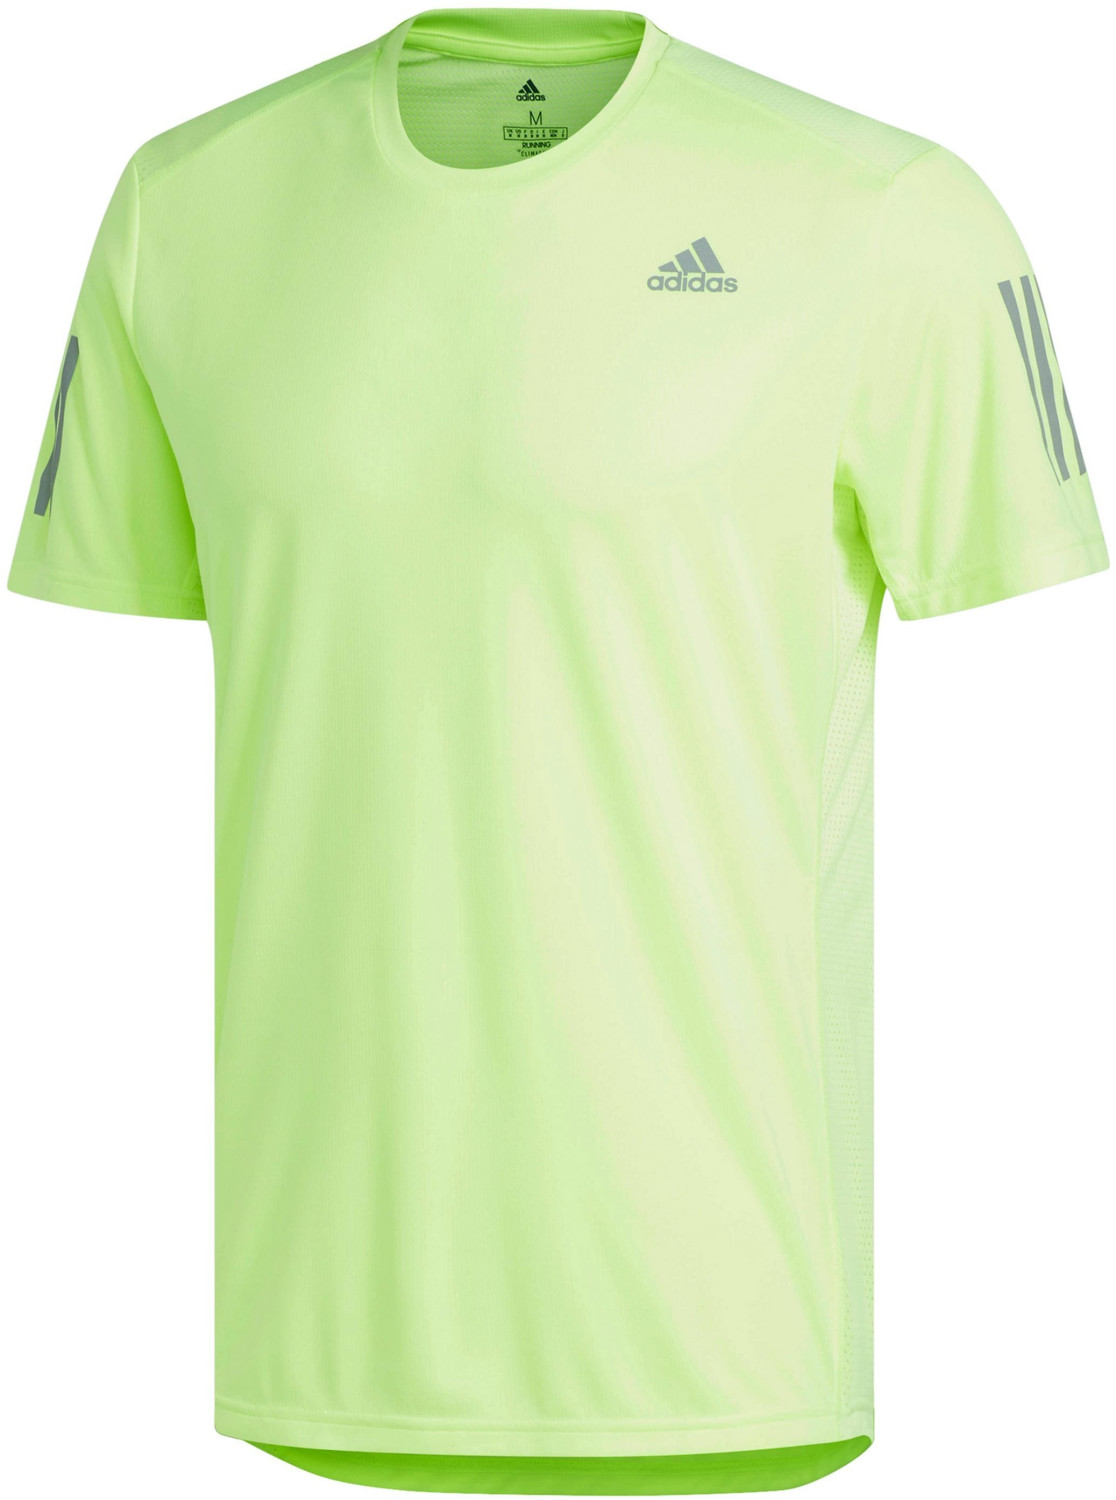 Adidas Own The Run T-Shirt green/reflective silver